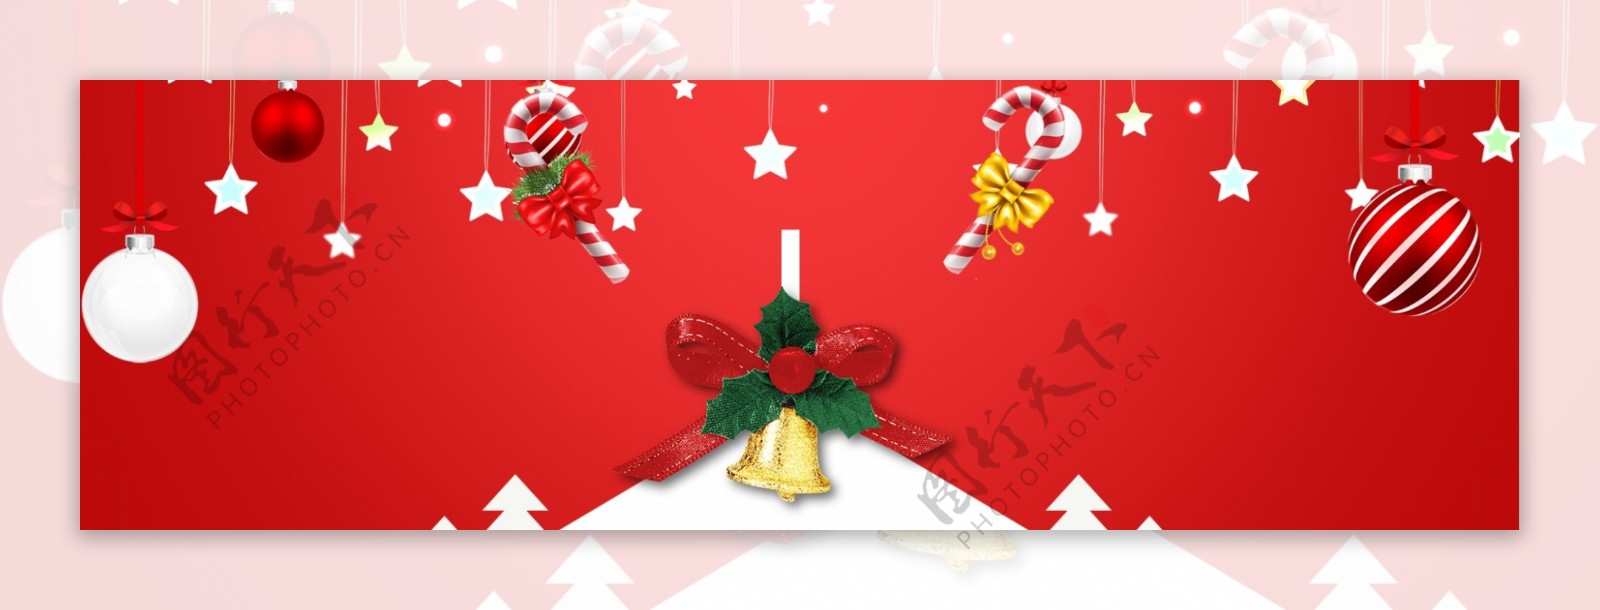 雪地冬天色圣诞节banner背景